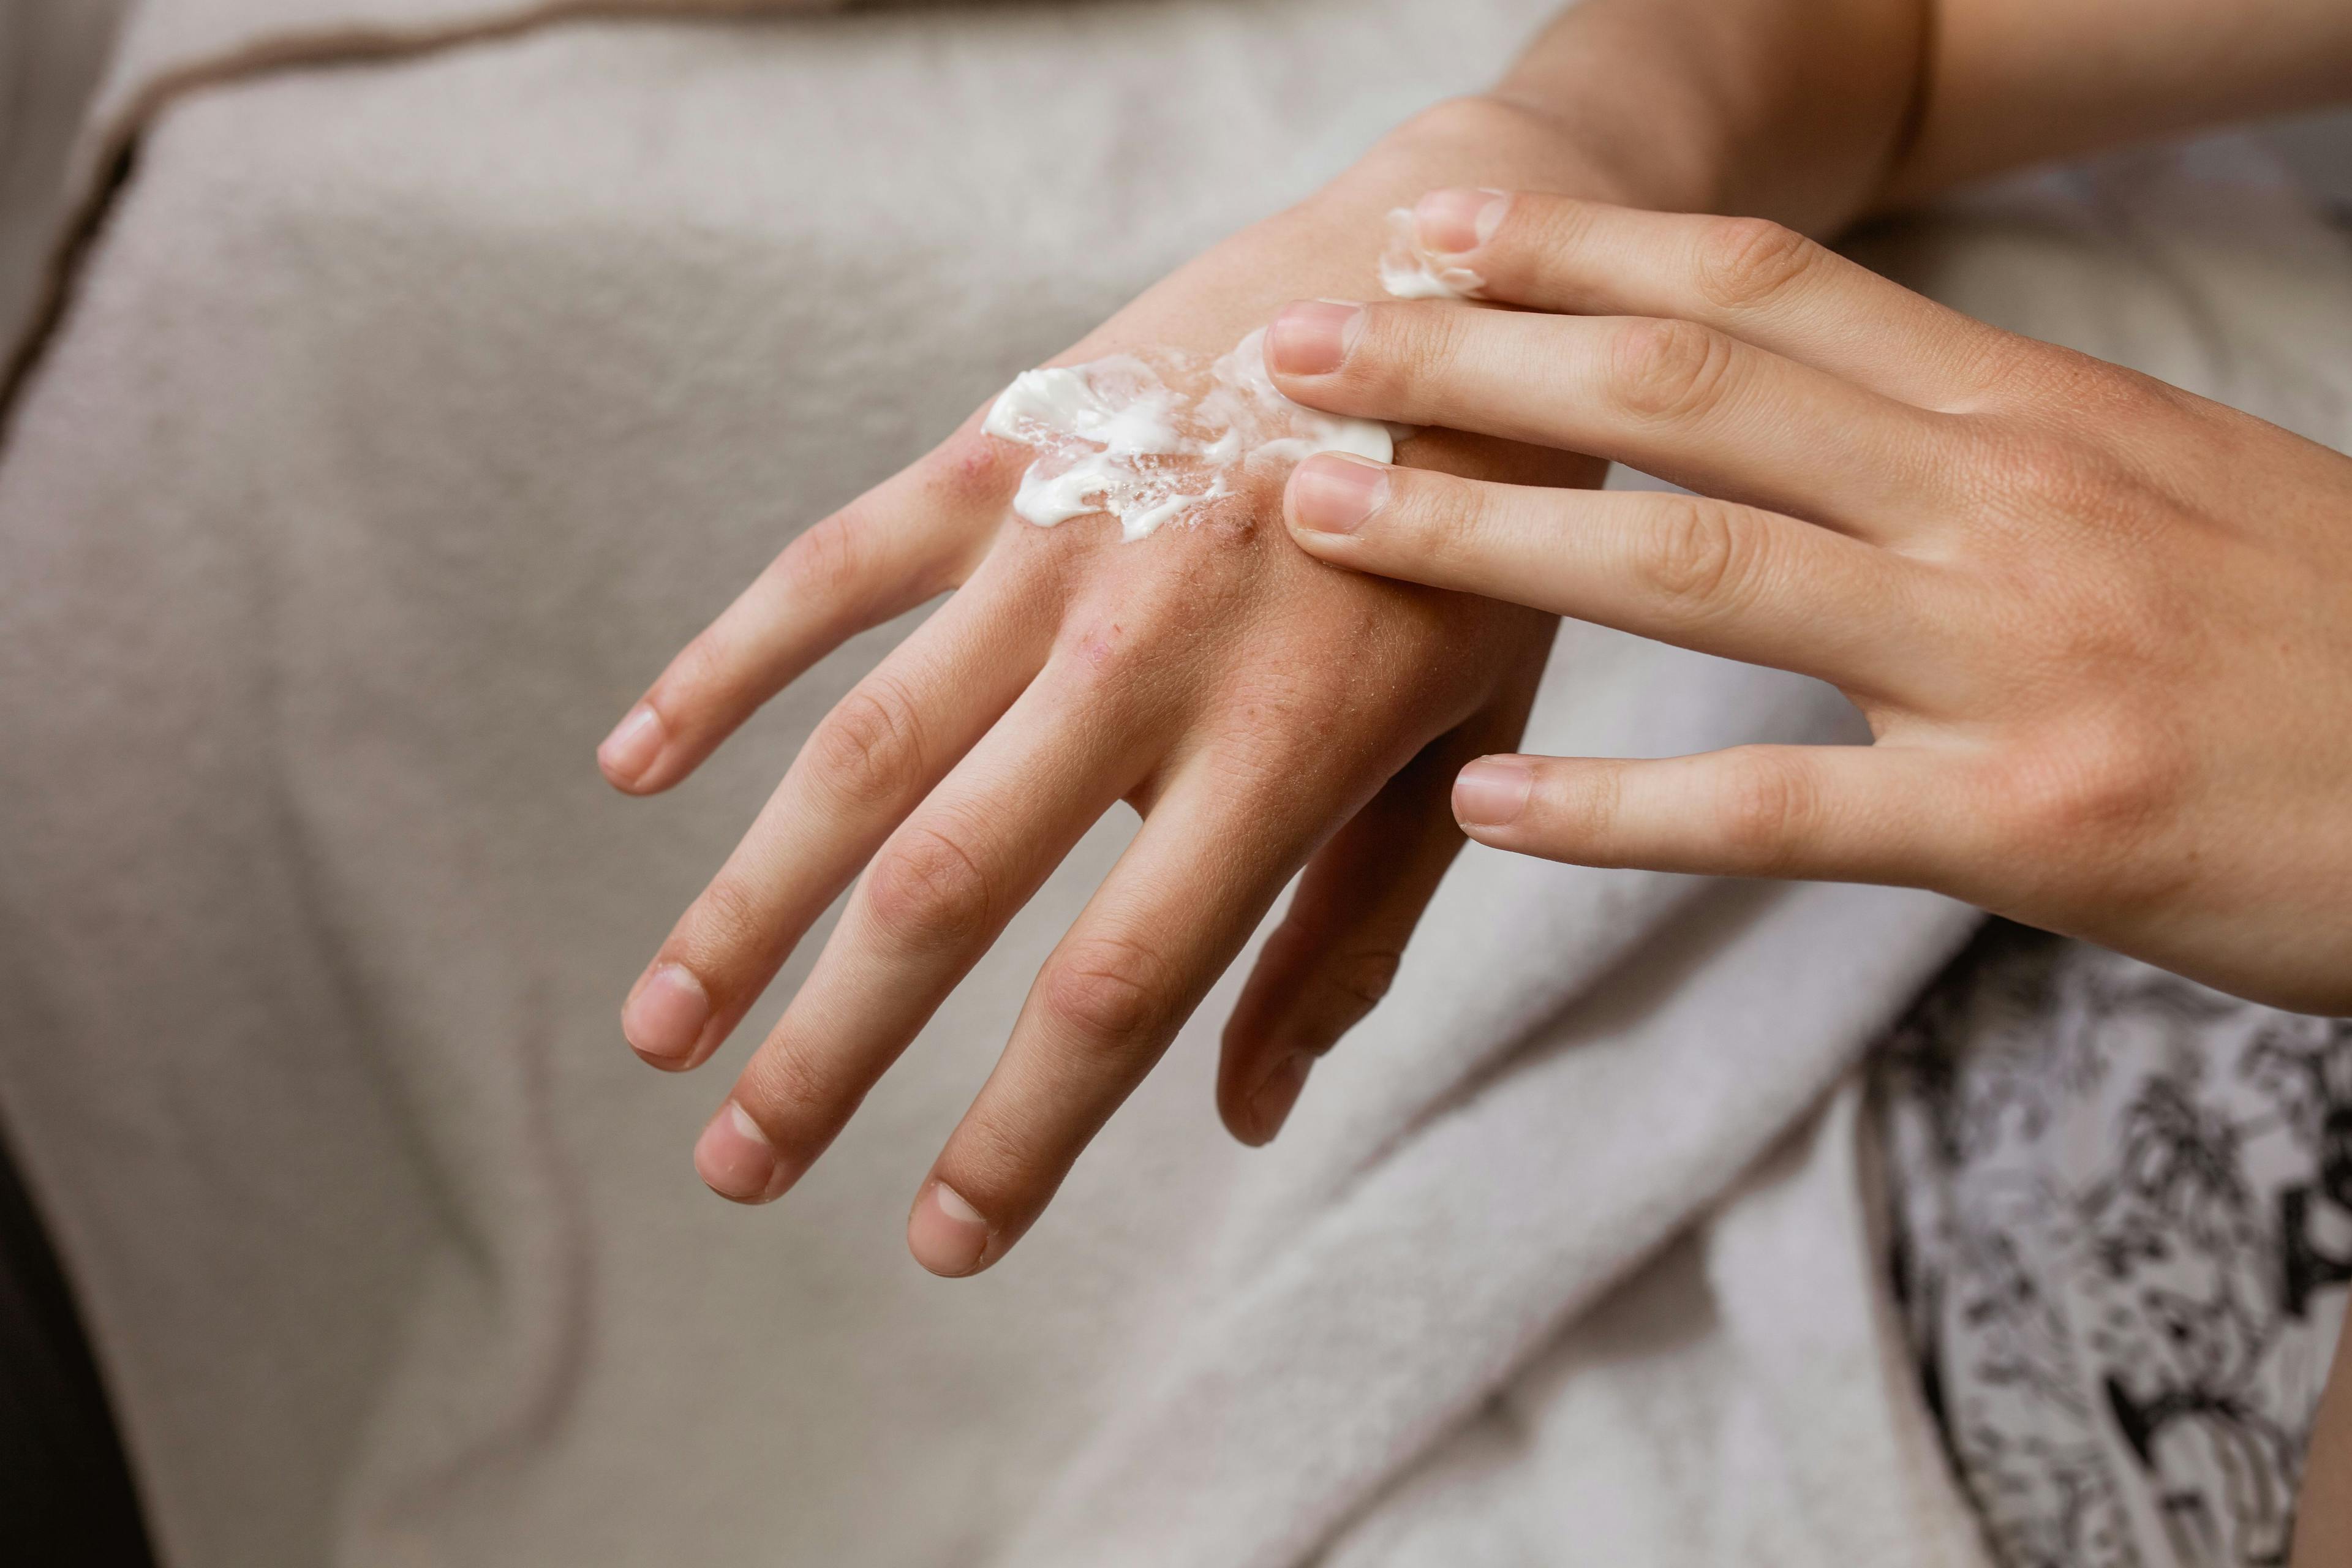 Topical Sulfur Cream 2.0% Demonstrates Equal Efficacy in Hand Eczema as Triamcinolone 0.1% Cream